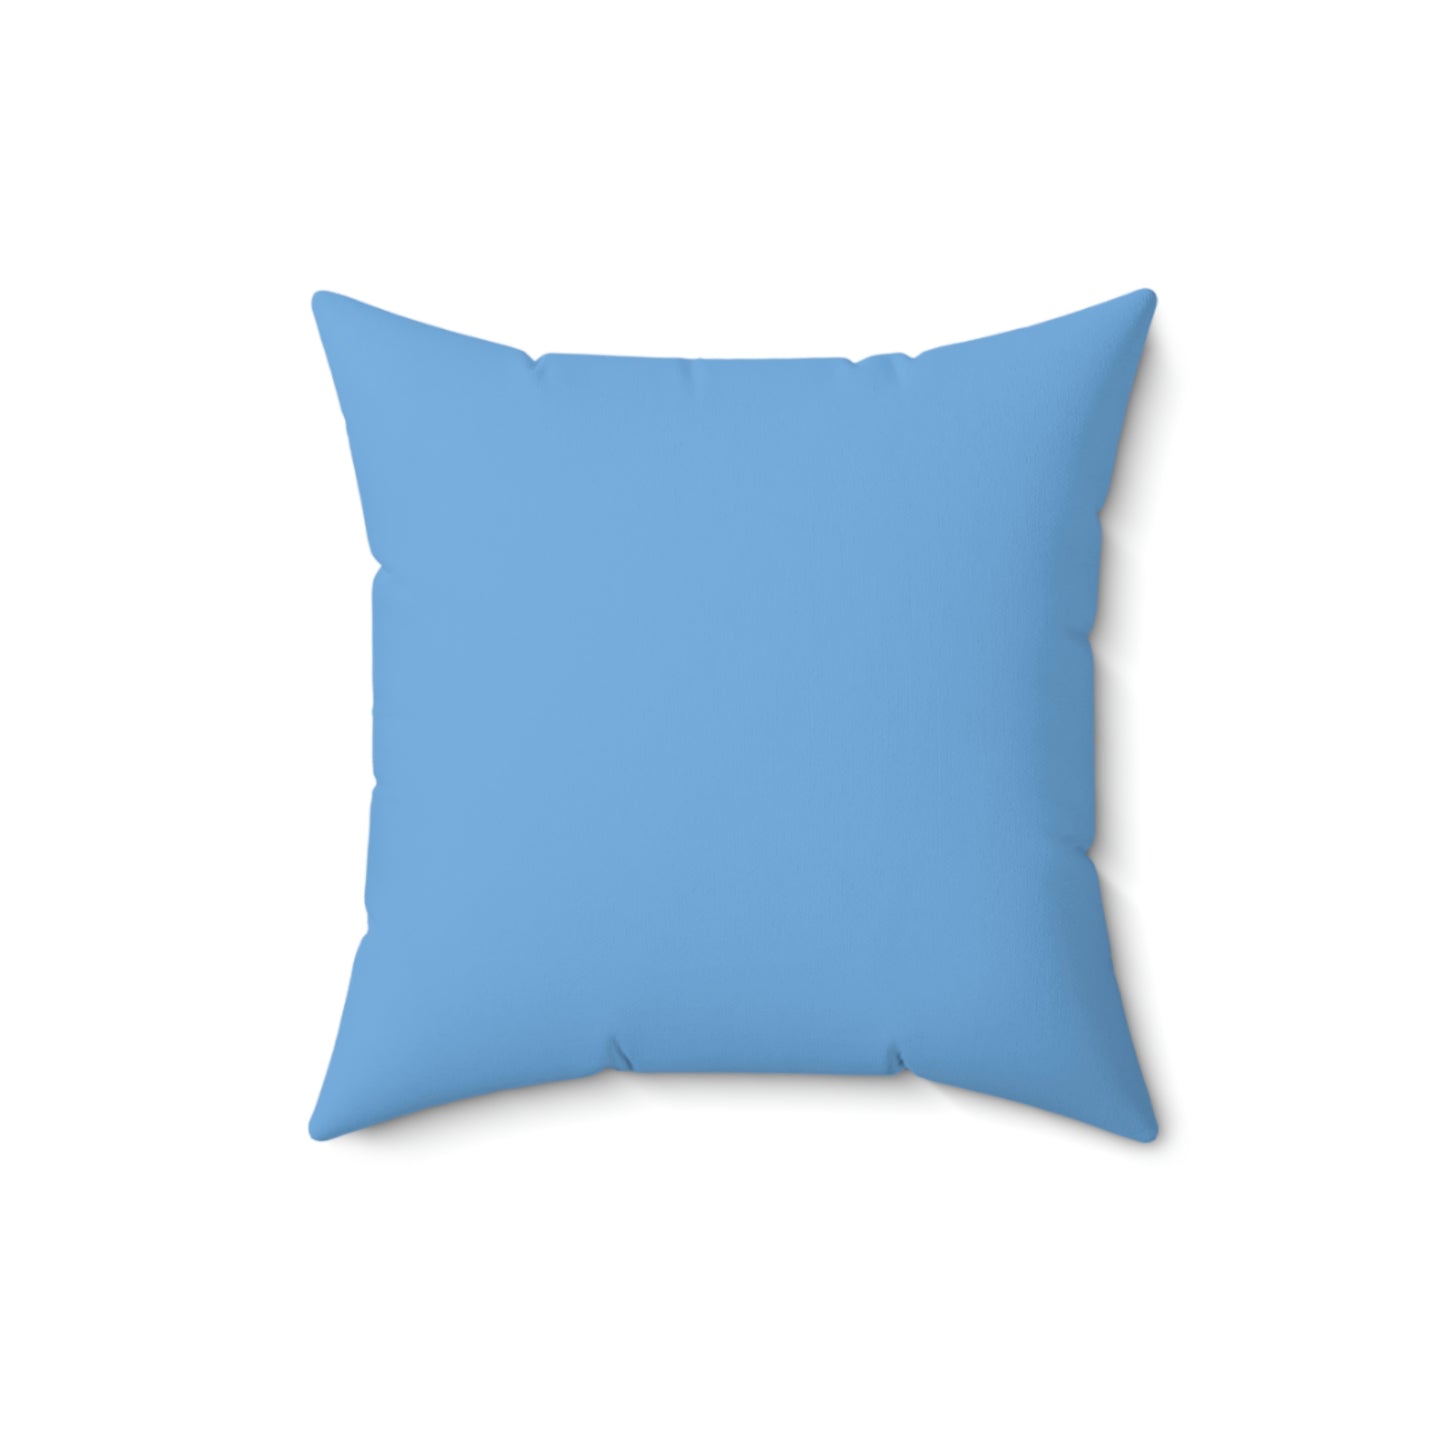 Spun Polyester Square Pillow Case “Kindergarten Rocks on Light Blue”